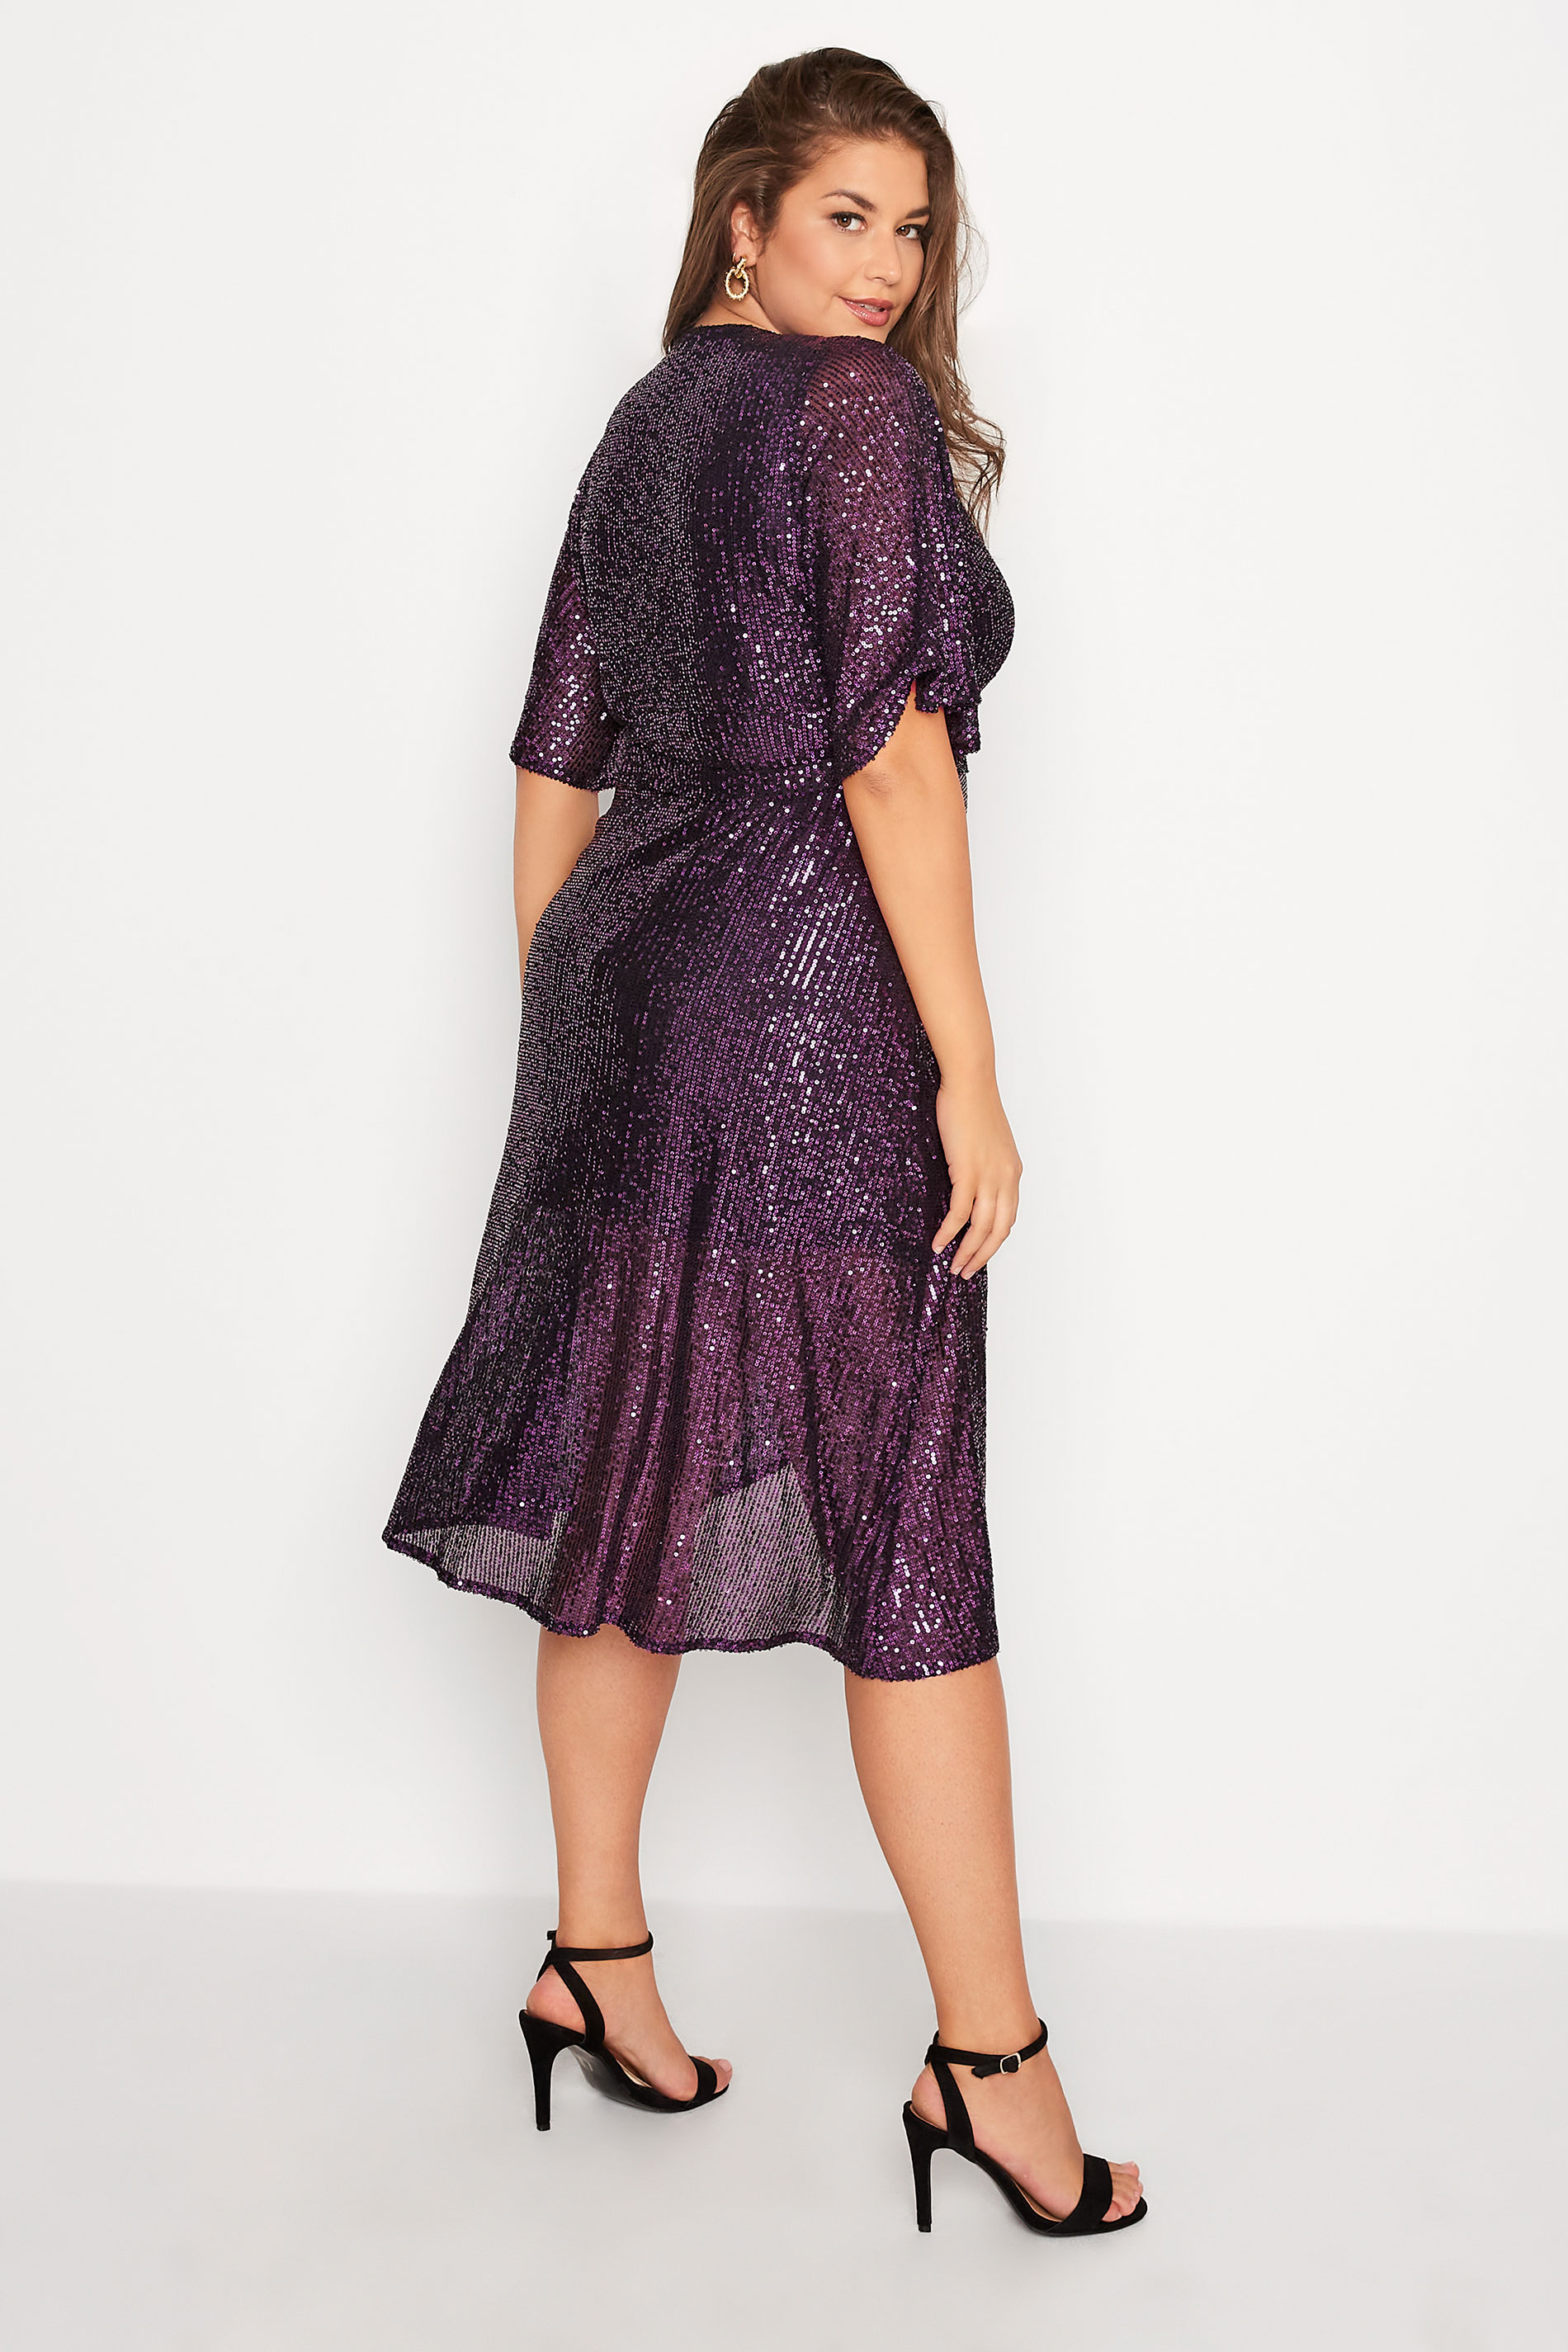 YOURS LONDON Plus Size Purple Sequin Embellished Wrap Bodysuit